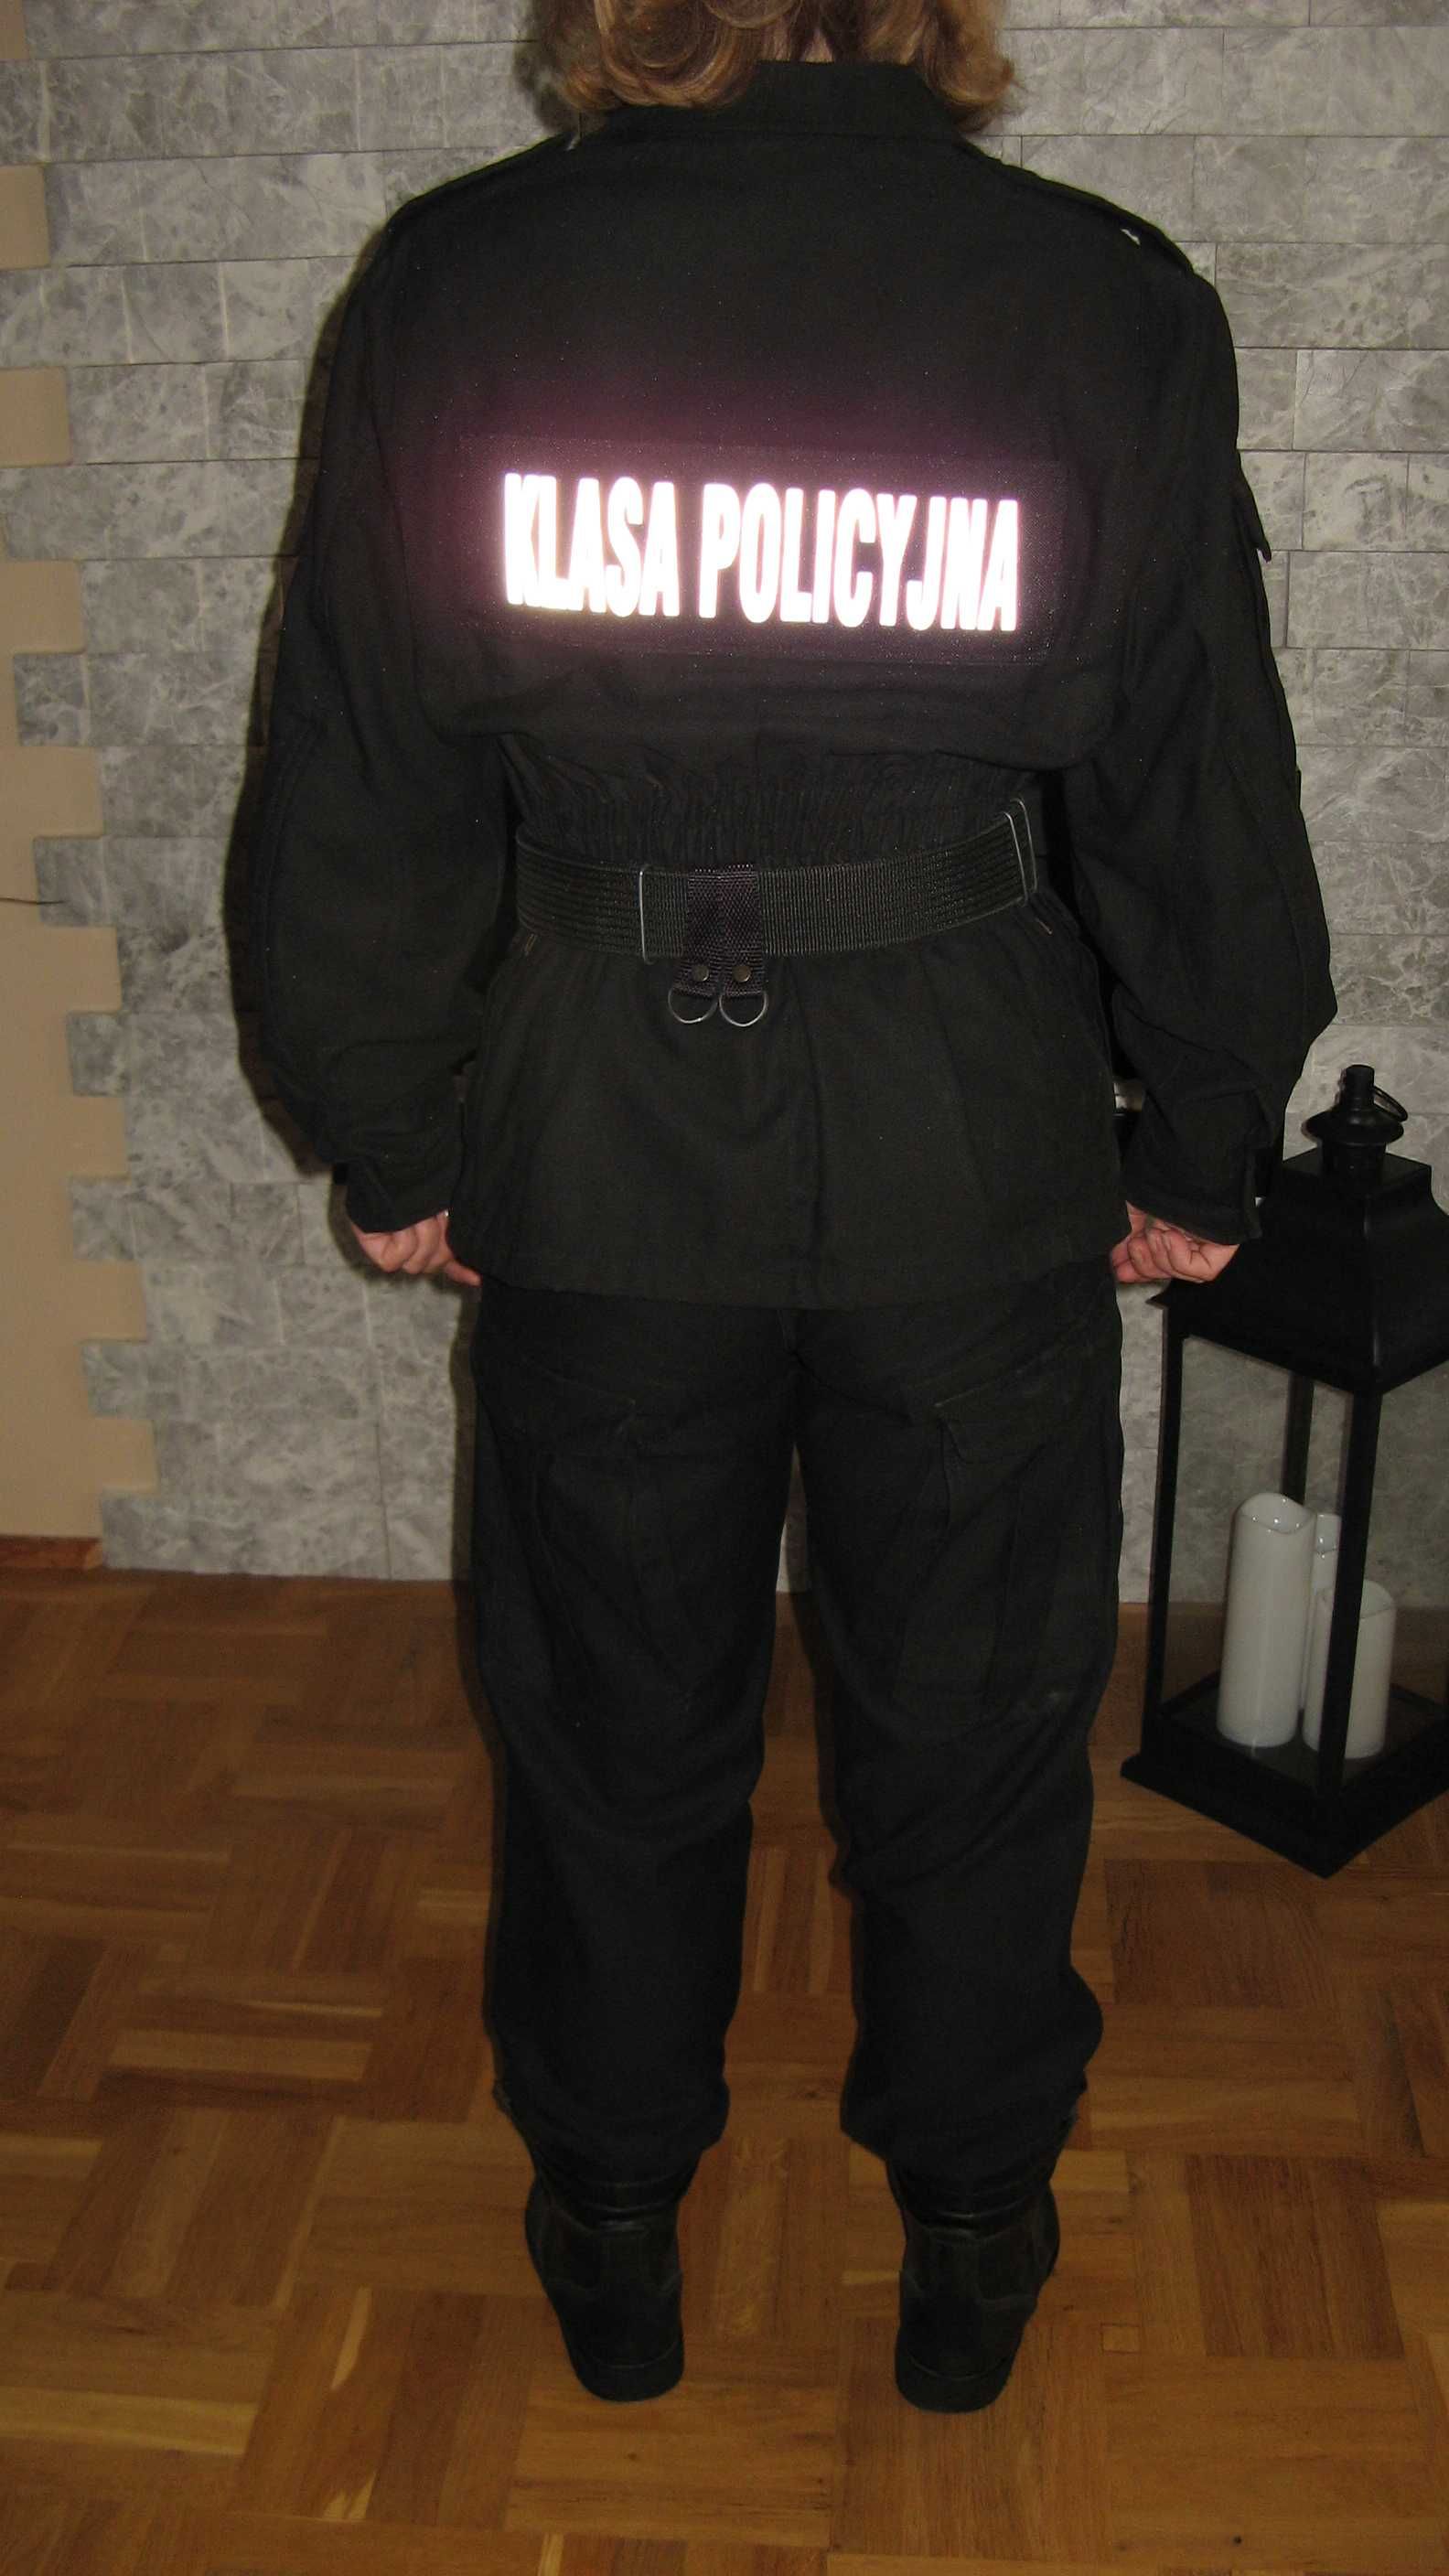 mundur klasy policyjnej